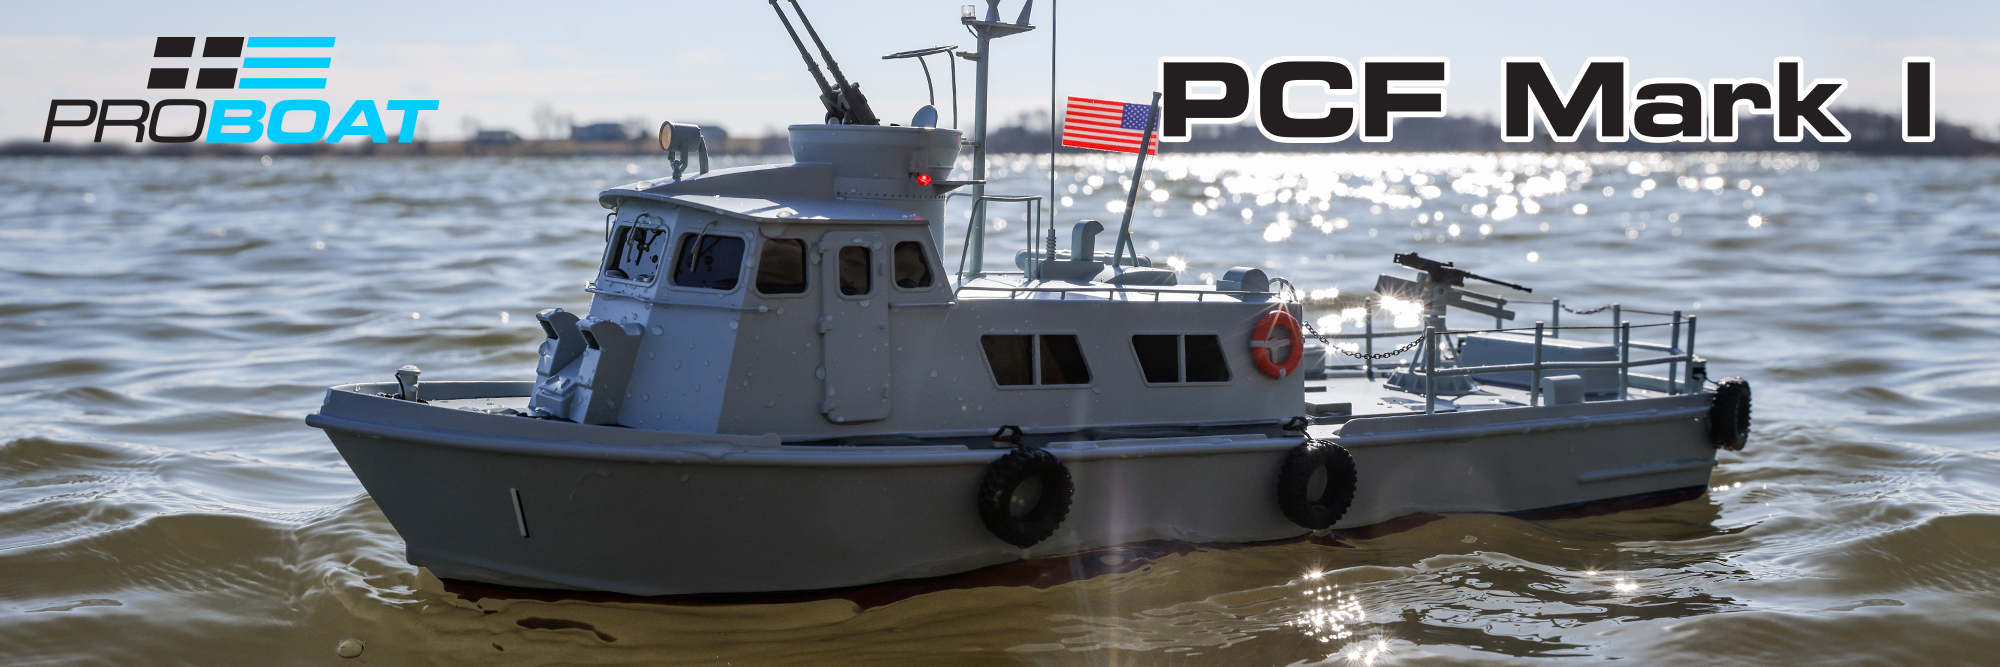 https://www.tjdmodels.com/product/pro-boat-pcf-mark-i-24-swift-patrol-craft-rtrb-prb08046/